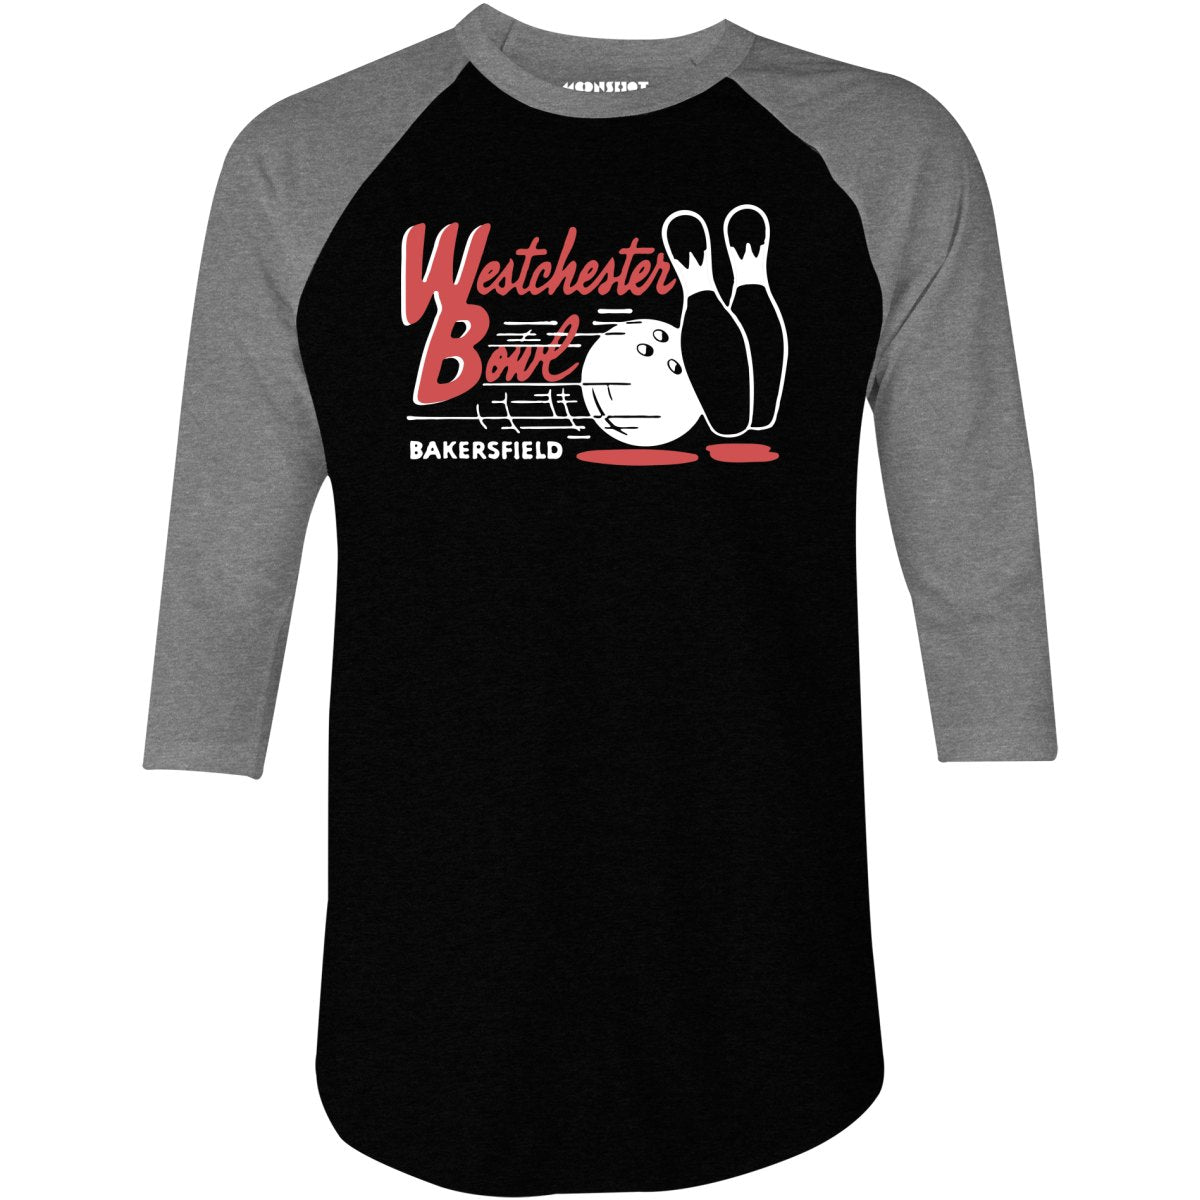 Westchester Bowl - Bakersfield, CA - Vintage Bowling Alley - 3/4 Sleeve Raglan T-Shirt